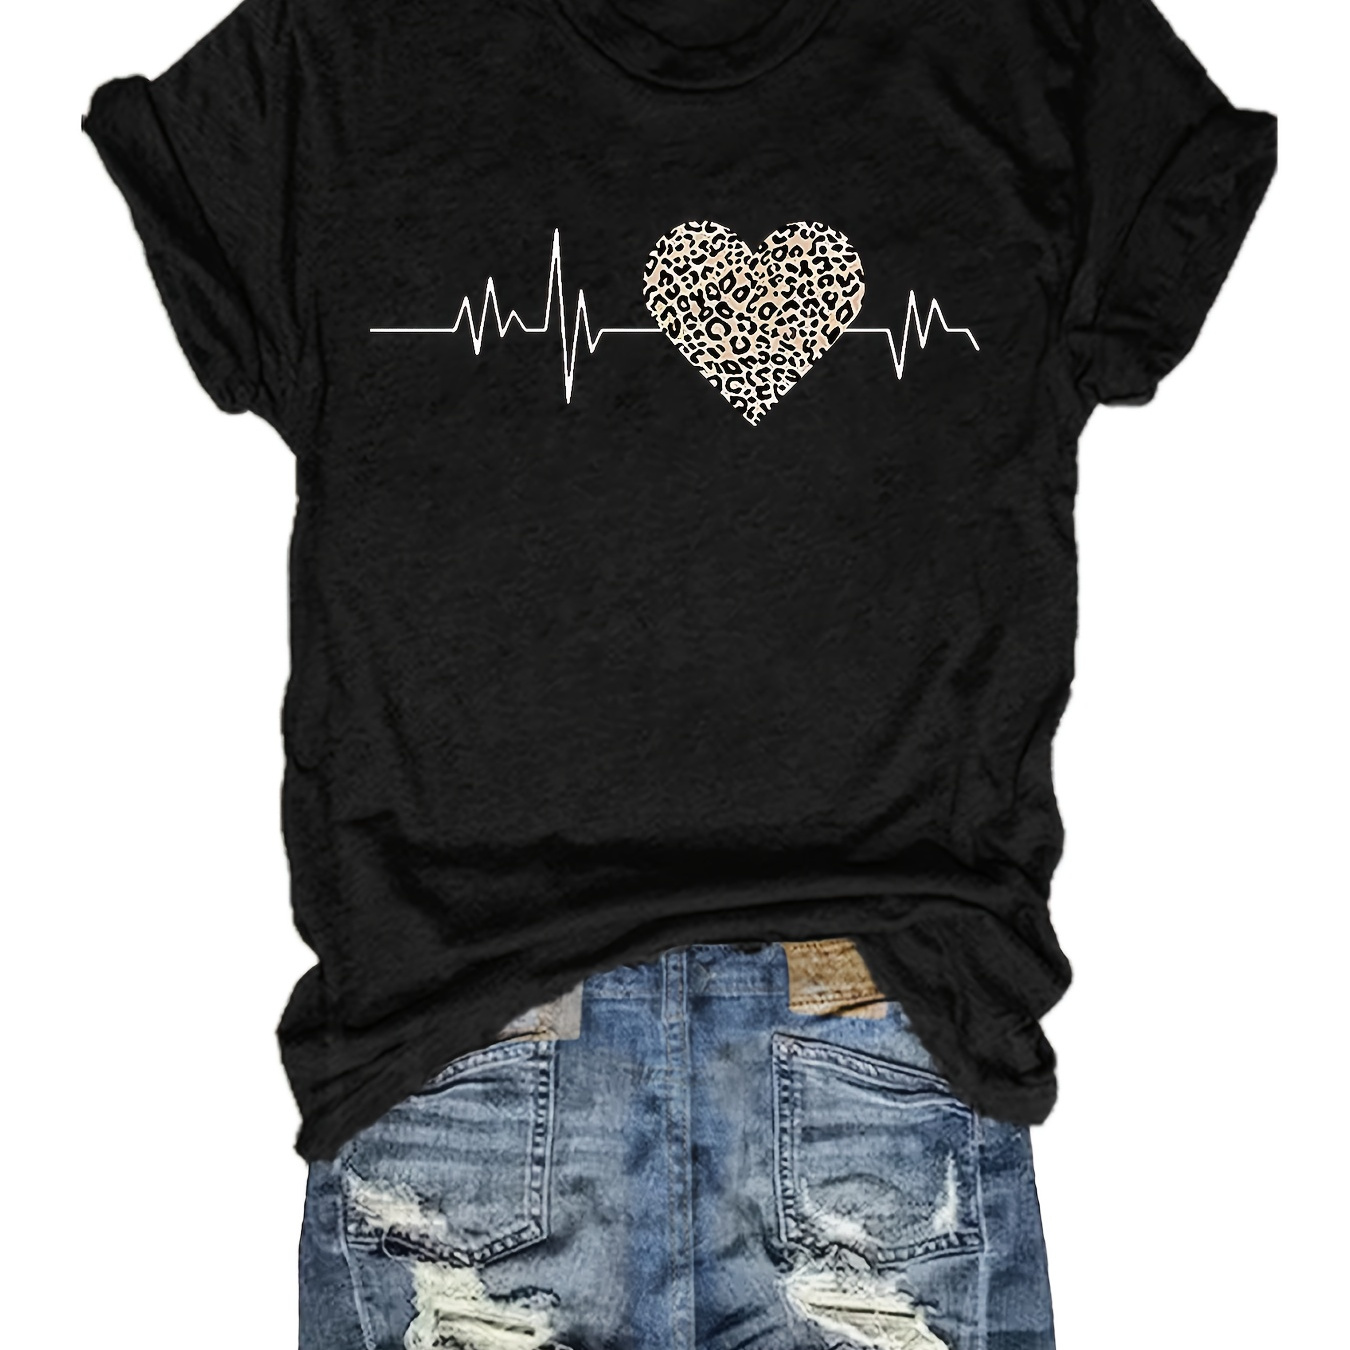 

Leopard Heart & Ekg Print T-shirt, Short Sleeve Crew Neck Casual Top For Summer & Spring, Women's Clothing